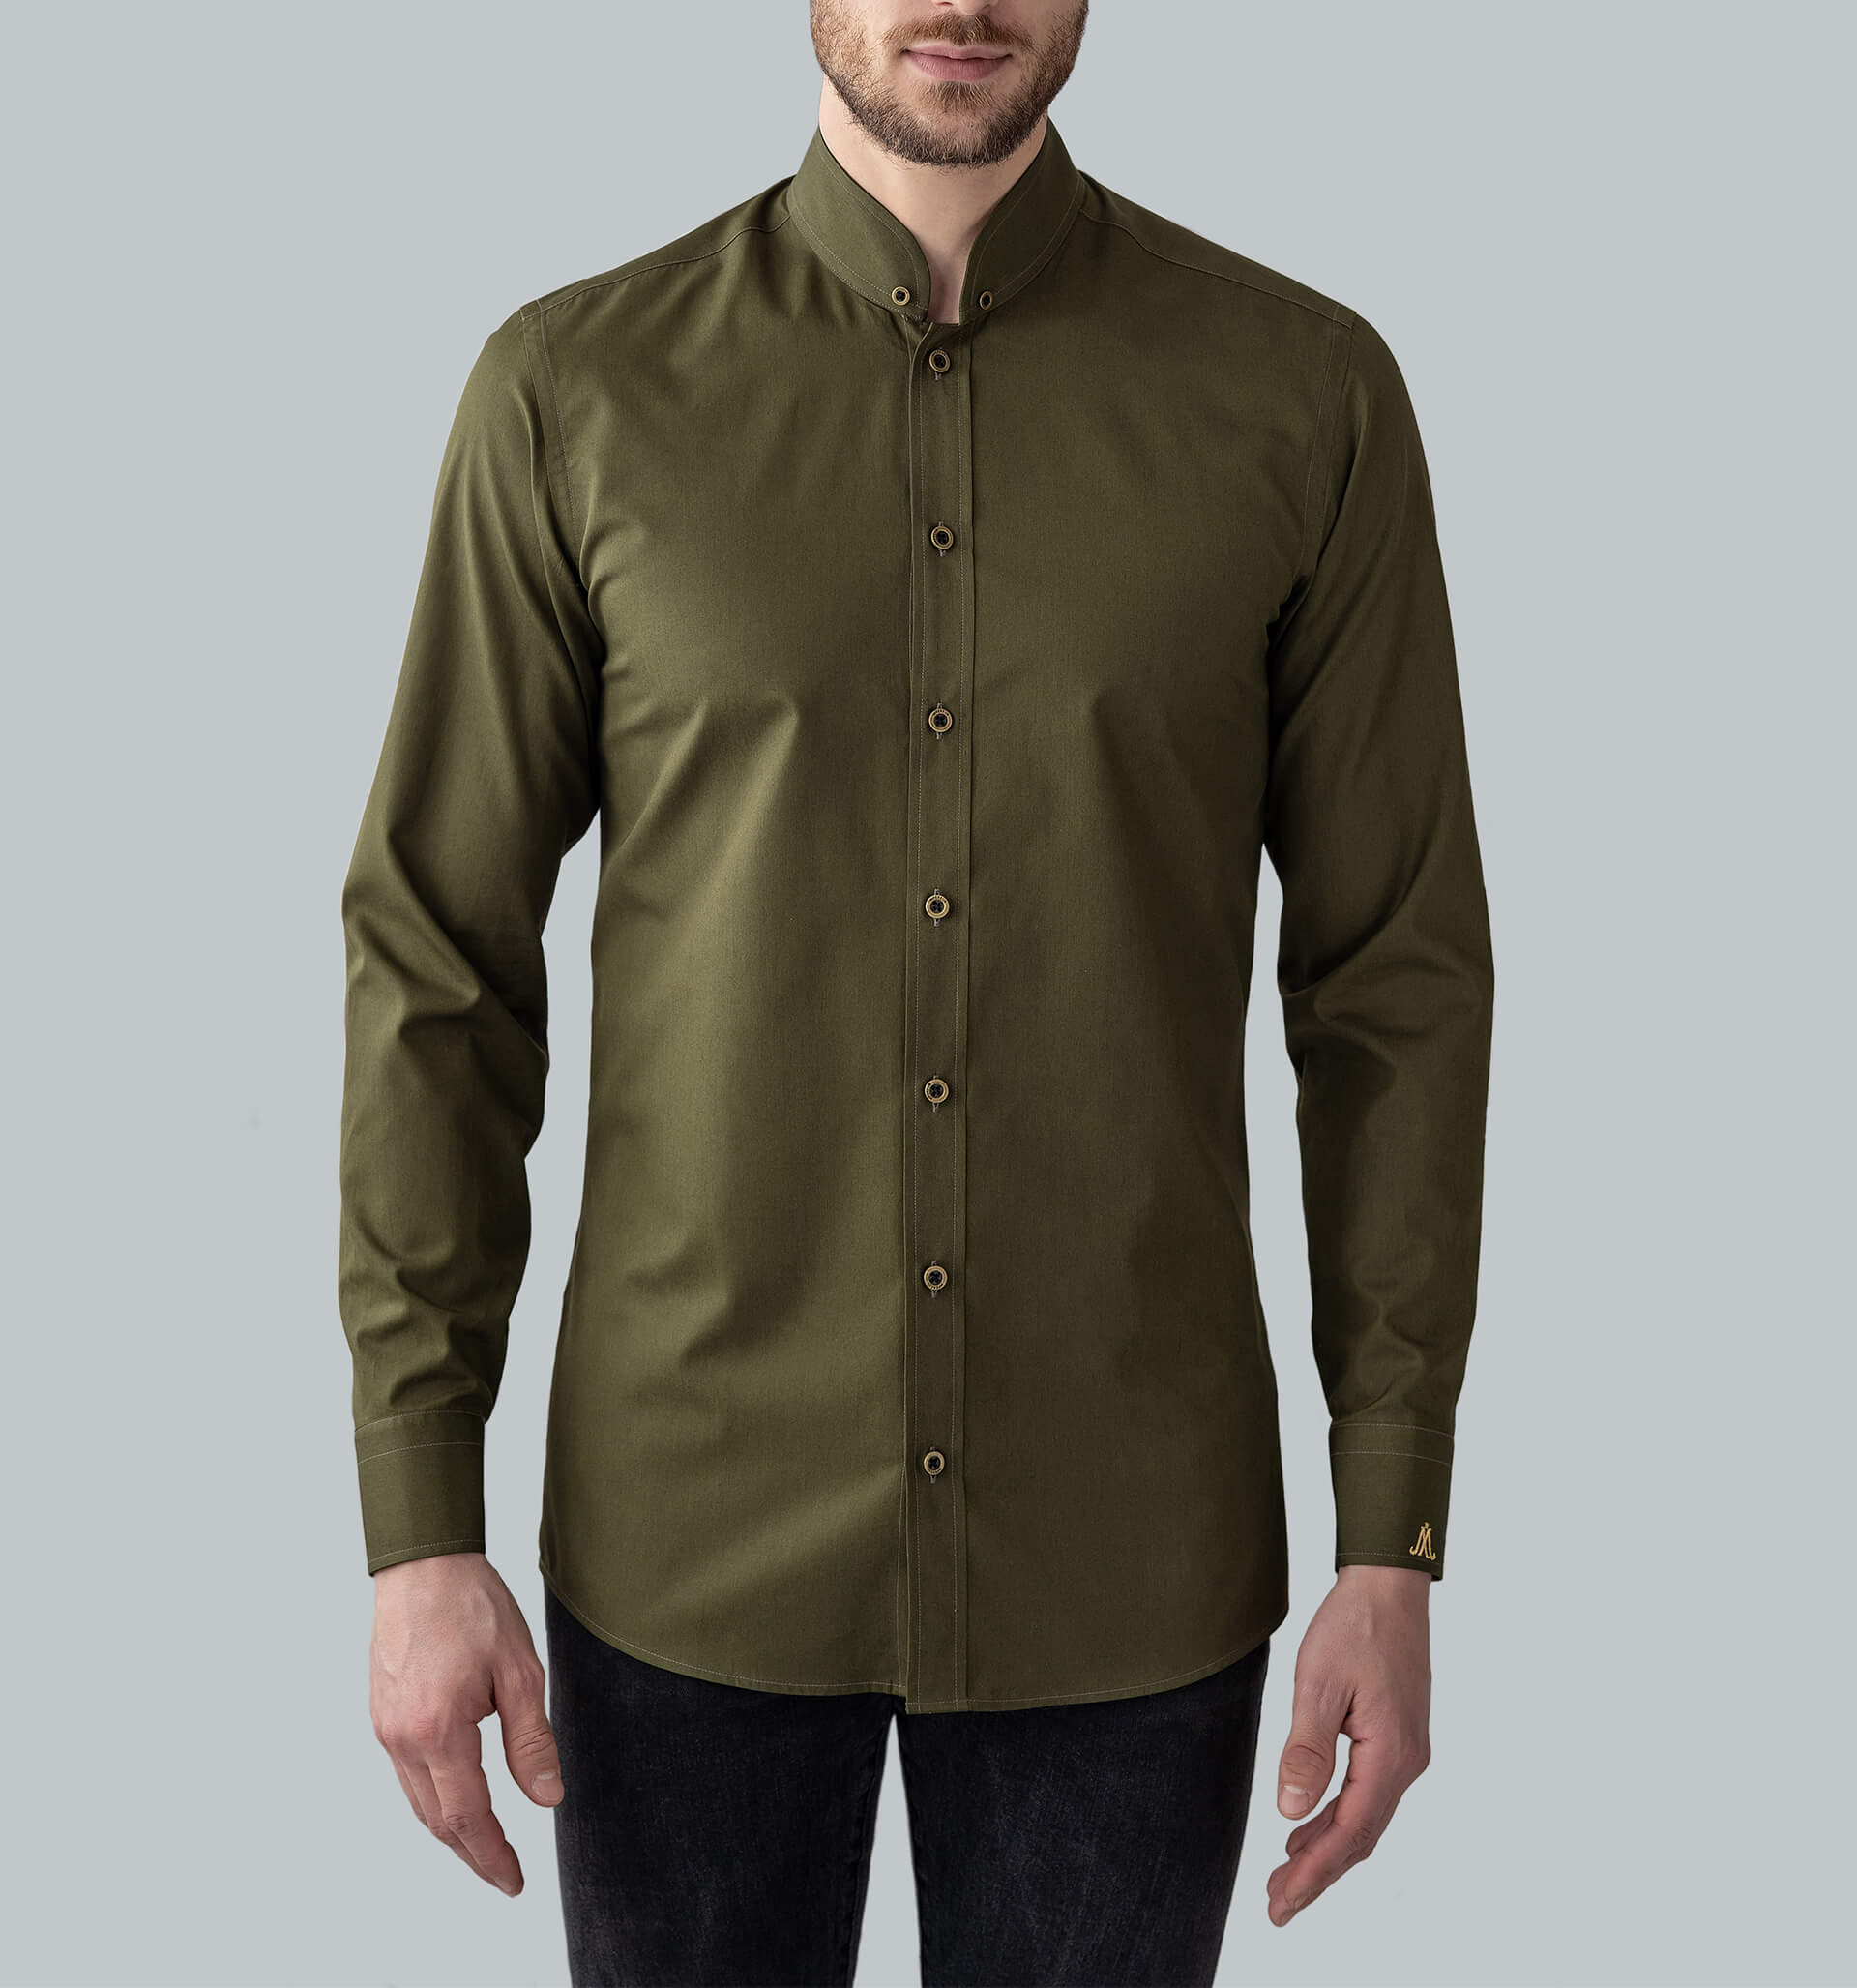 Military green cotton shirt